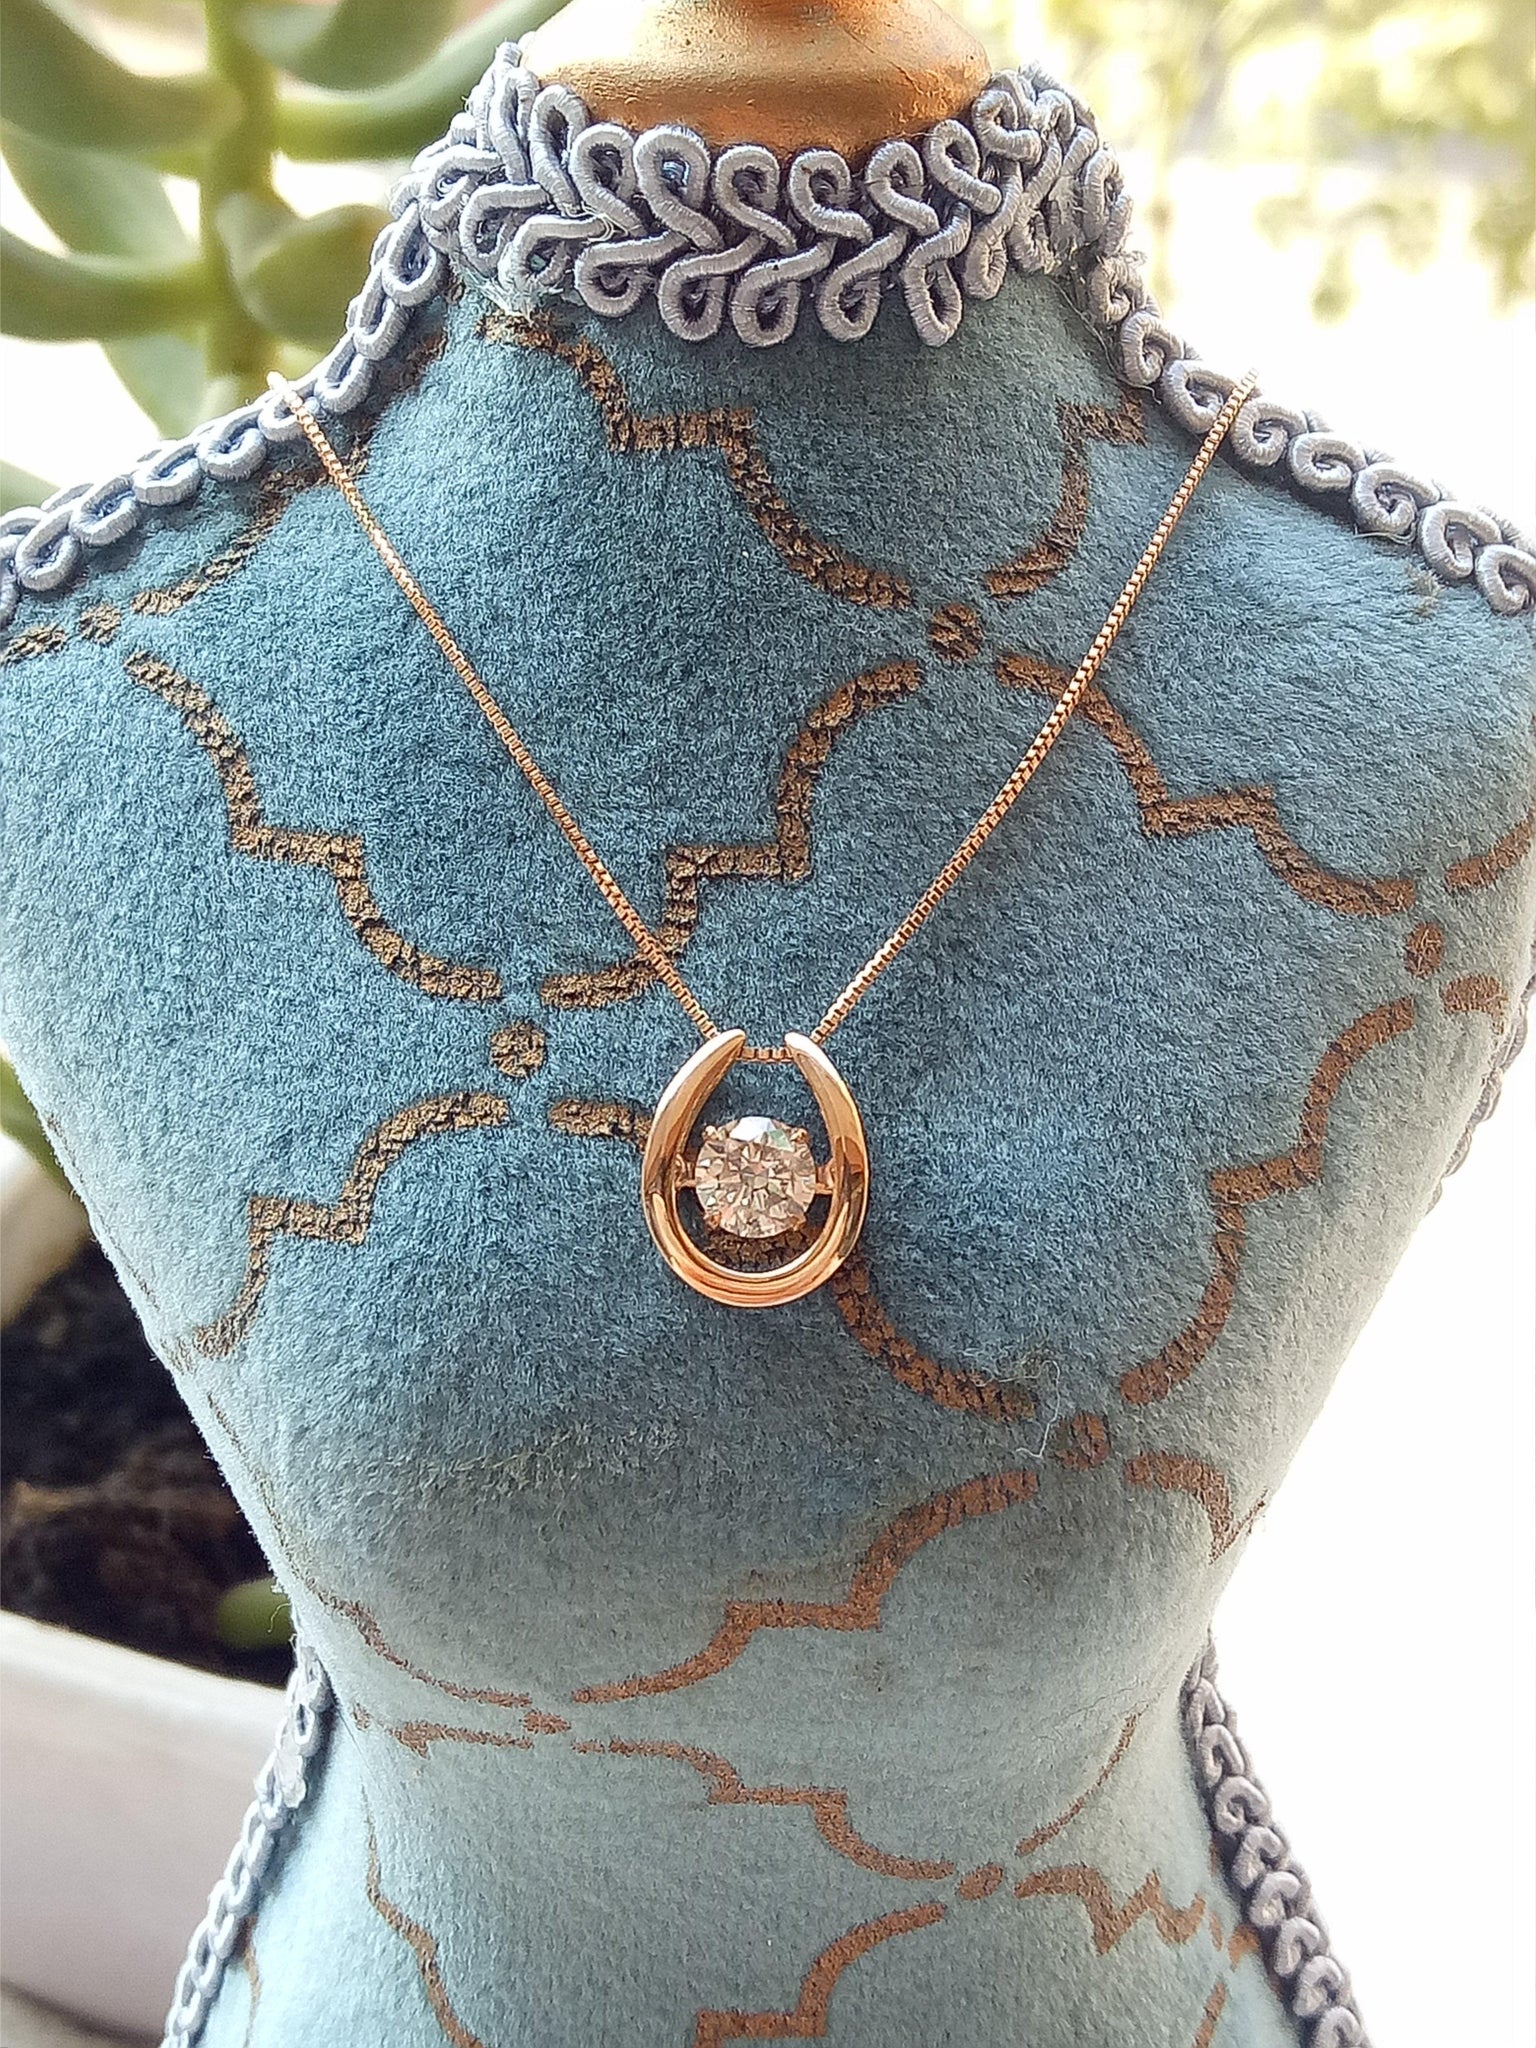 doveggs diamond pendant necklace 18k yellow gold center 0.4 carat diamond pendant necklace for women - DovEggs-Seattle